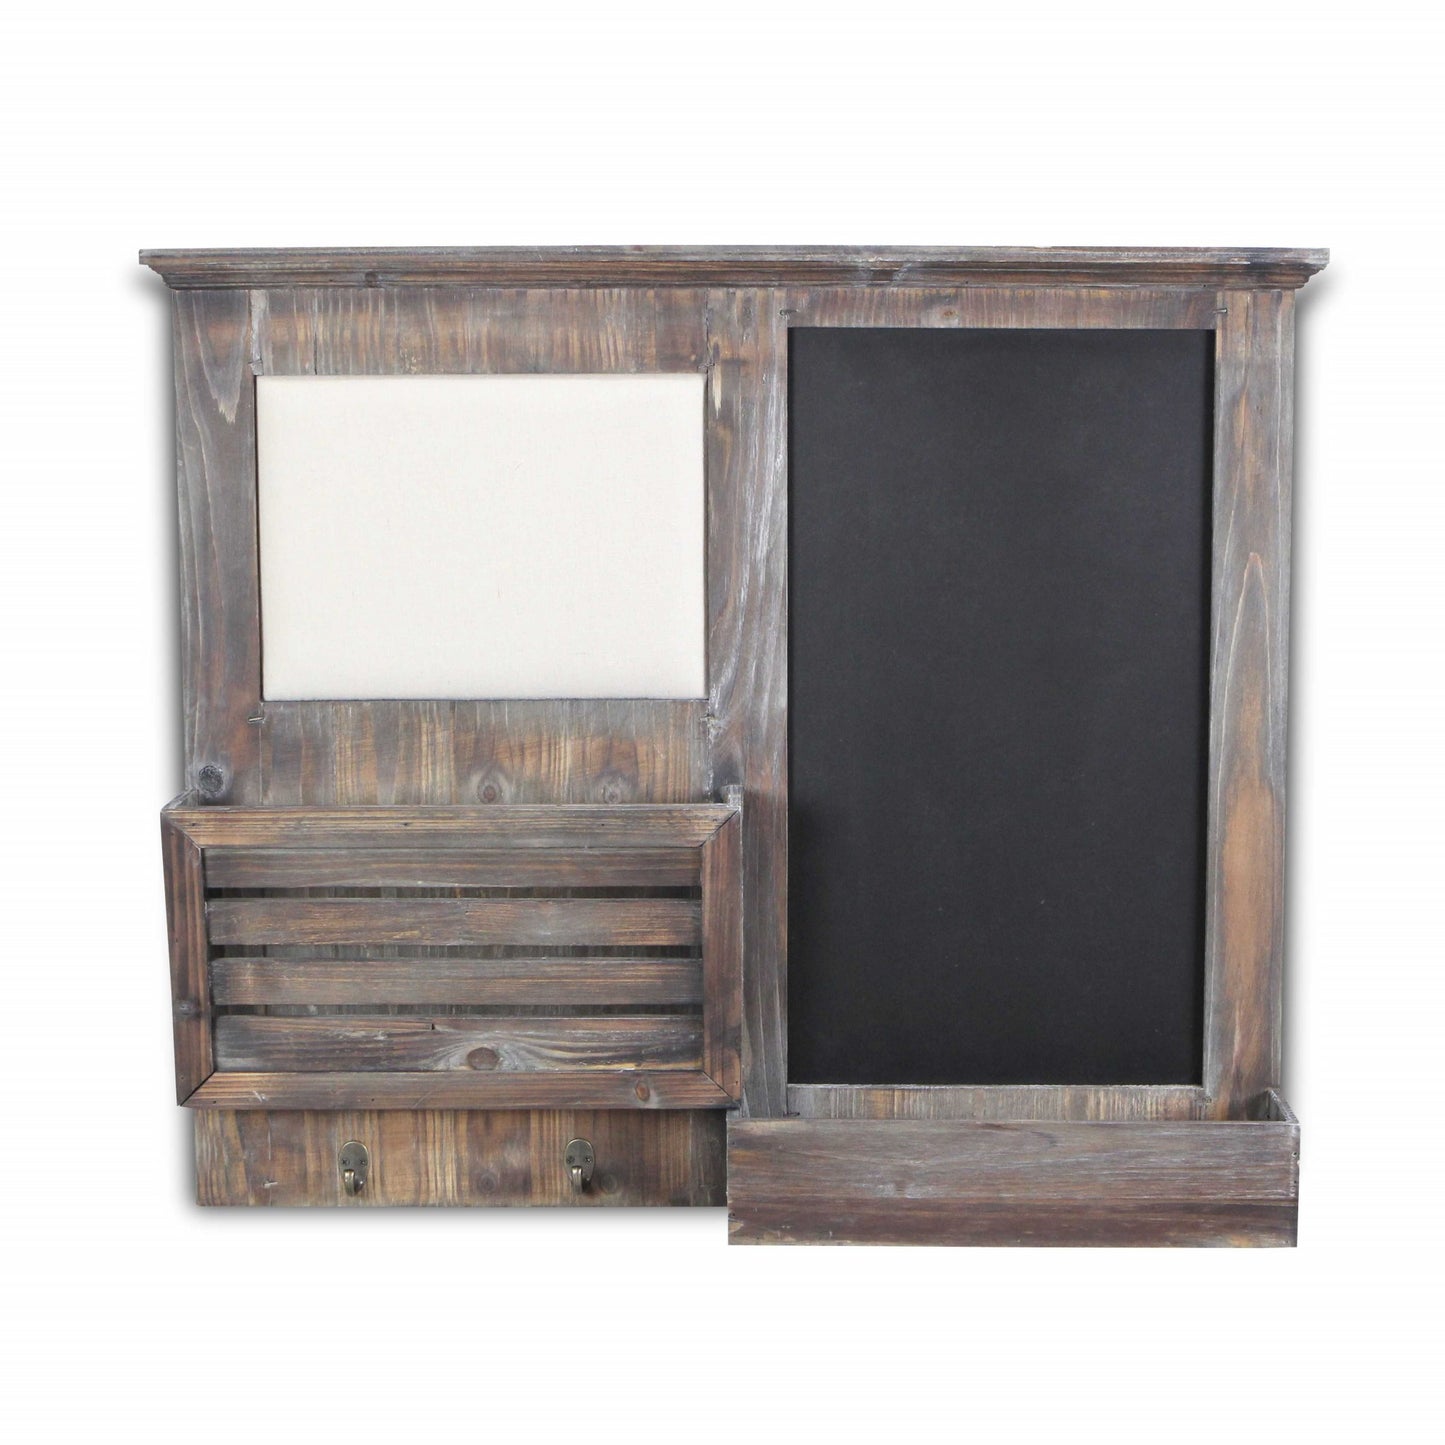 Gray Wooden Wall Chalkboard with Side Storage Basket